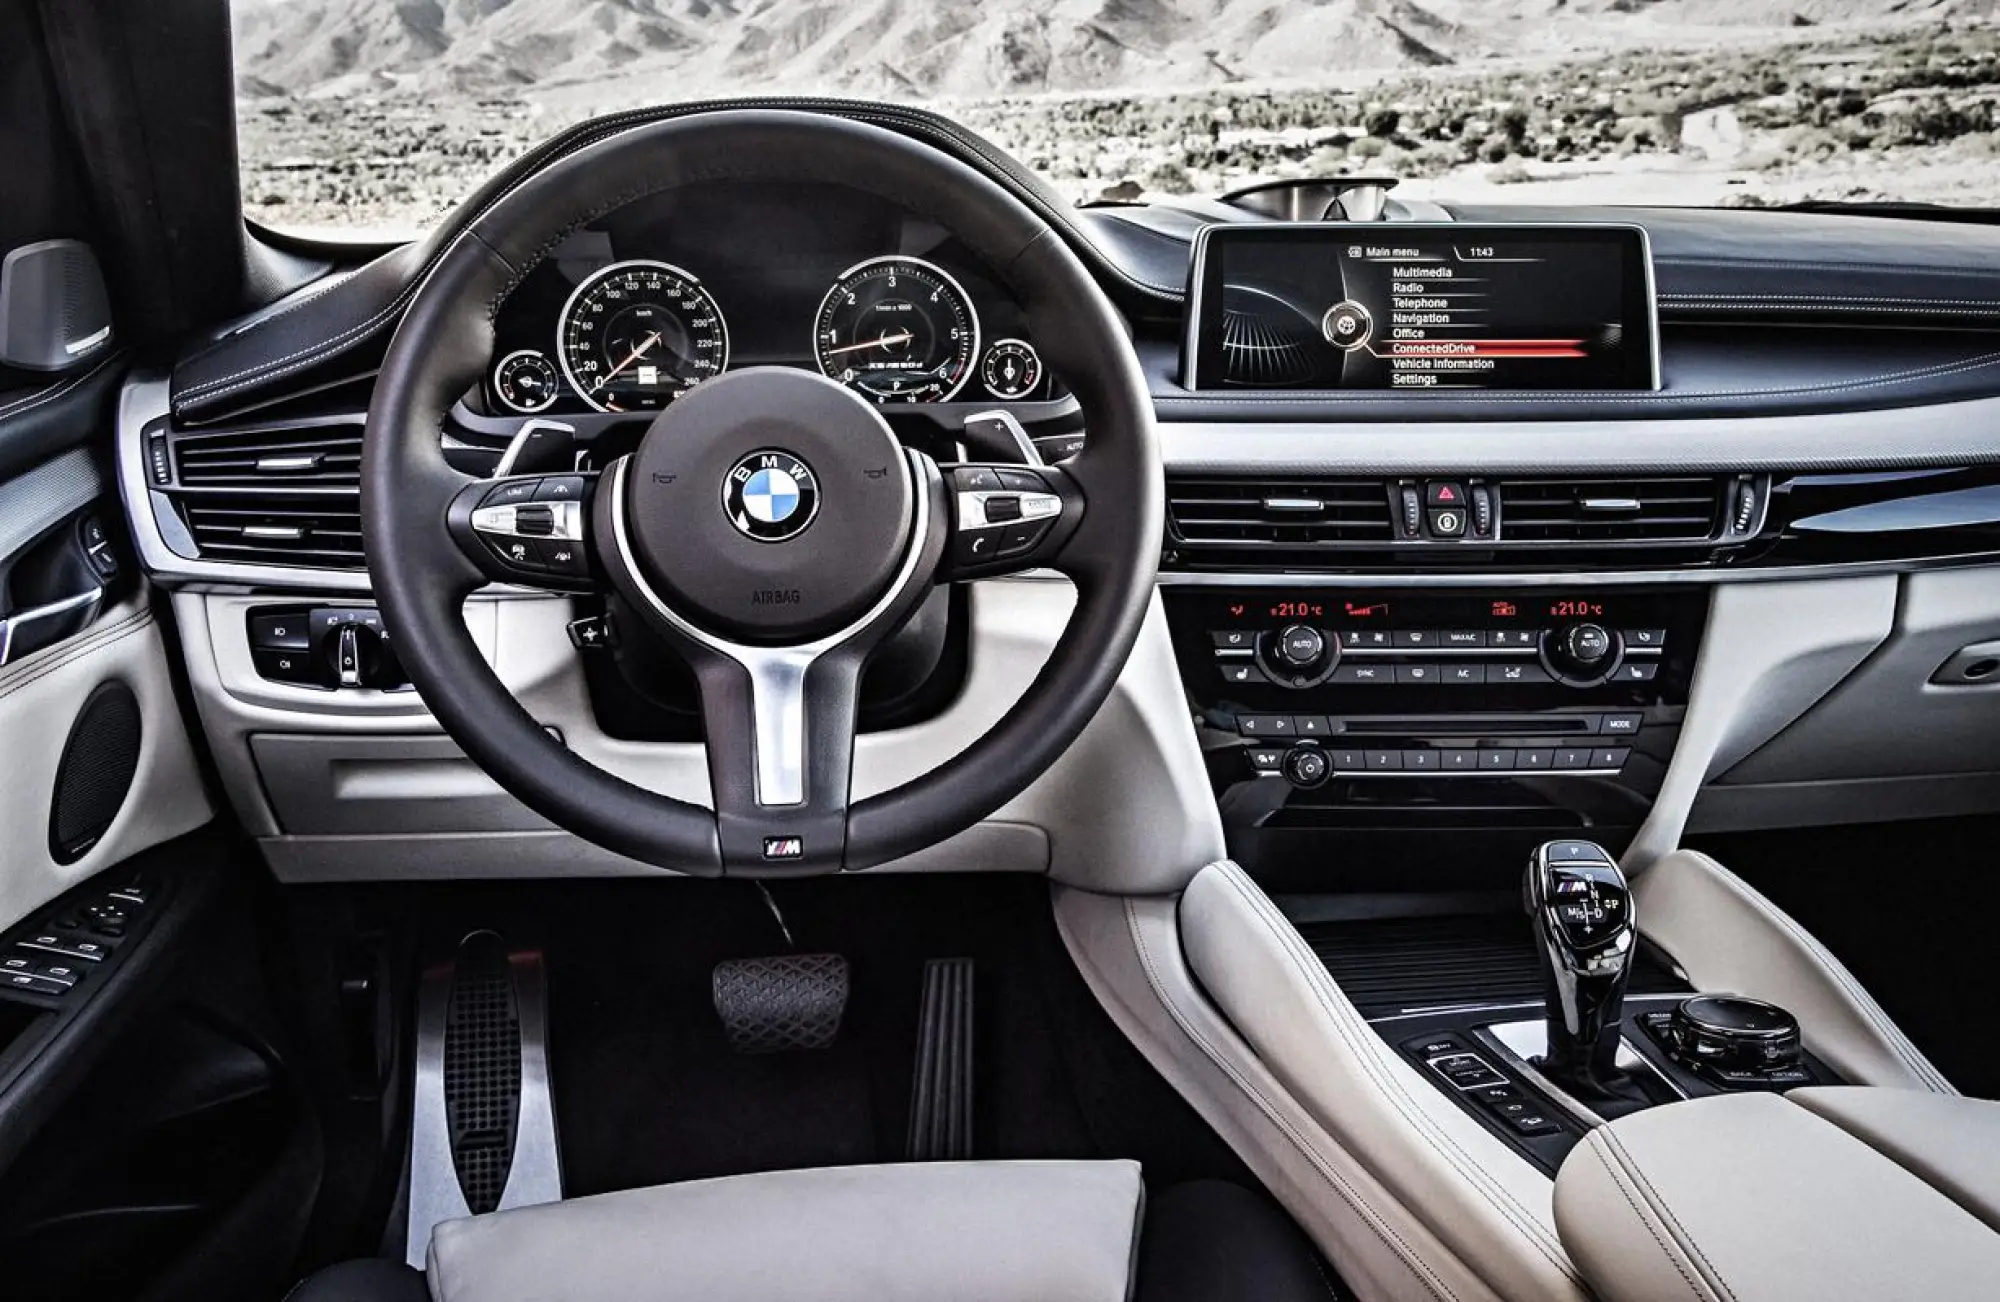 BMW X6 MY 2015 - Foto ufficiali - 5